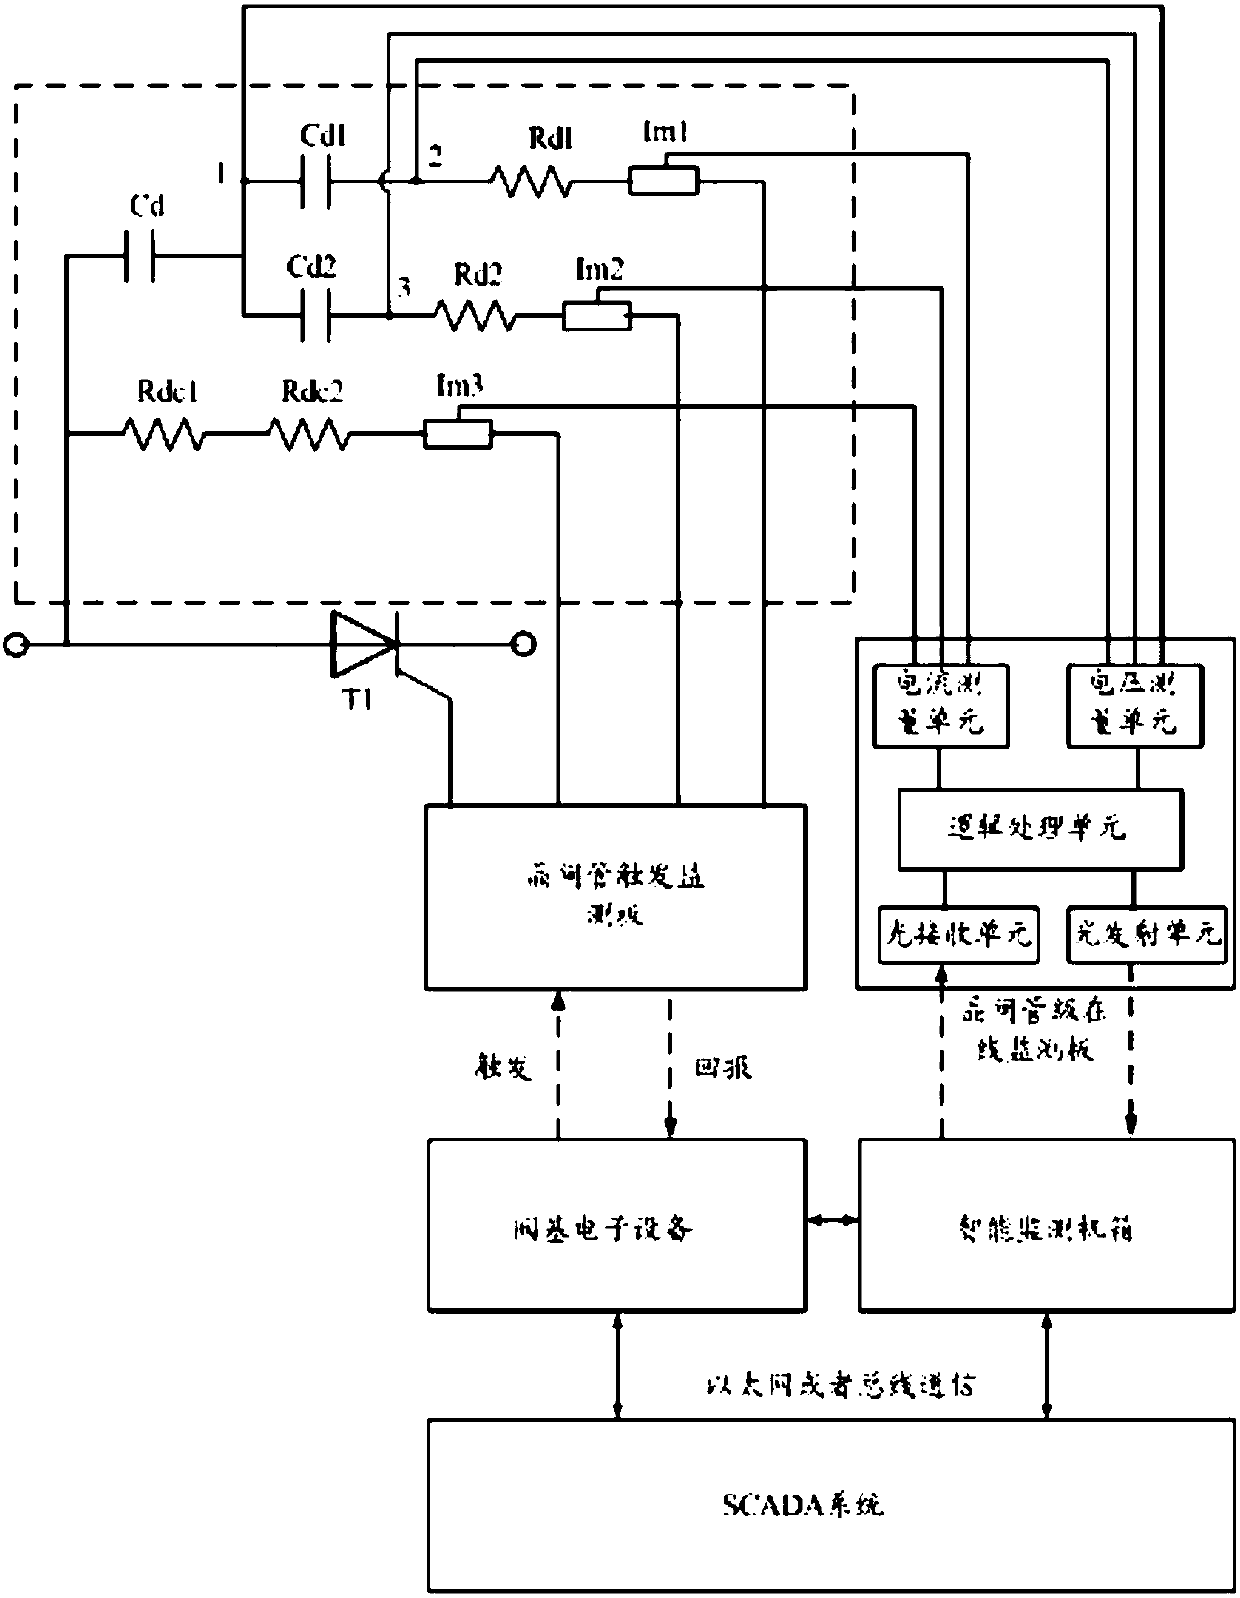 On-line monitoring system of high voltage DC converter valve